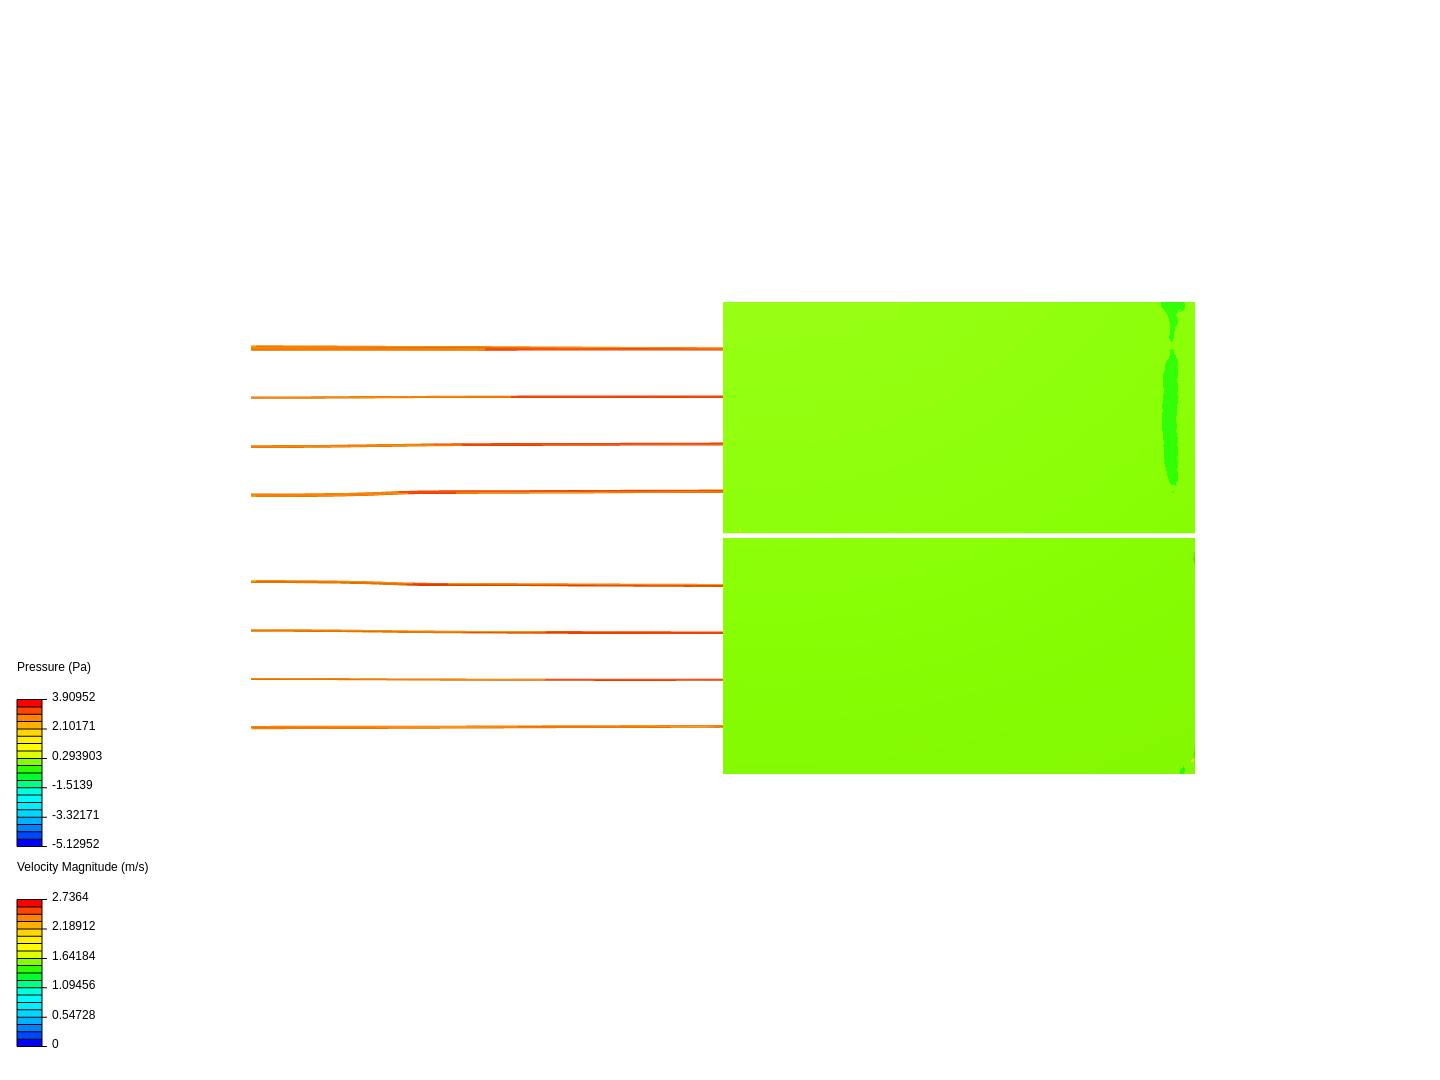 laminar flow through a flat plate image